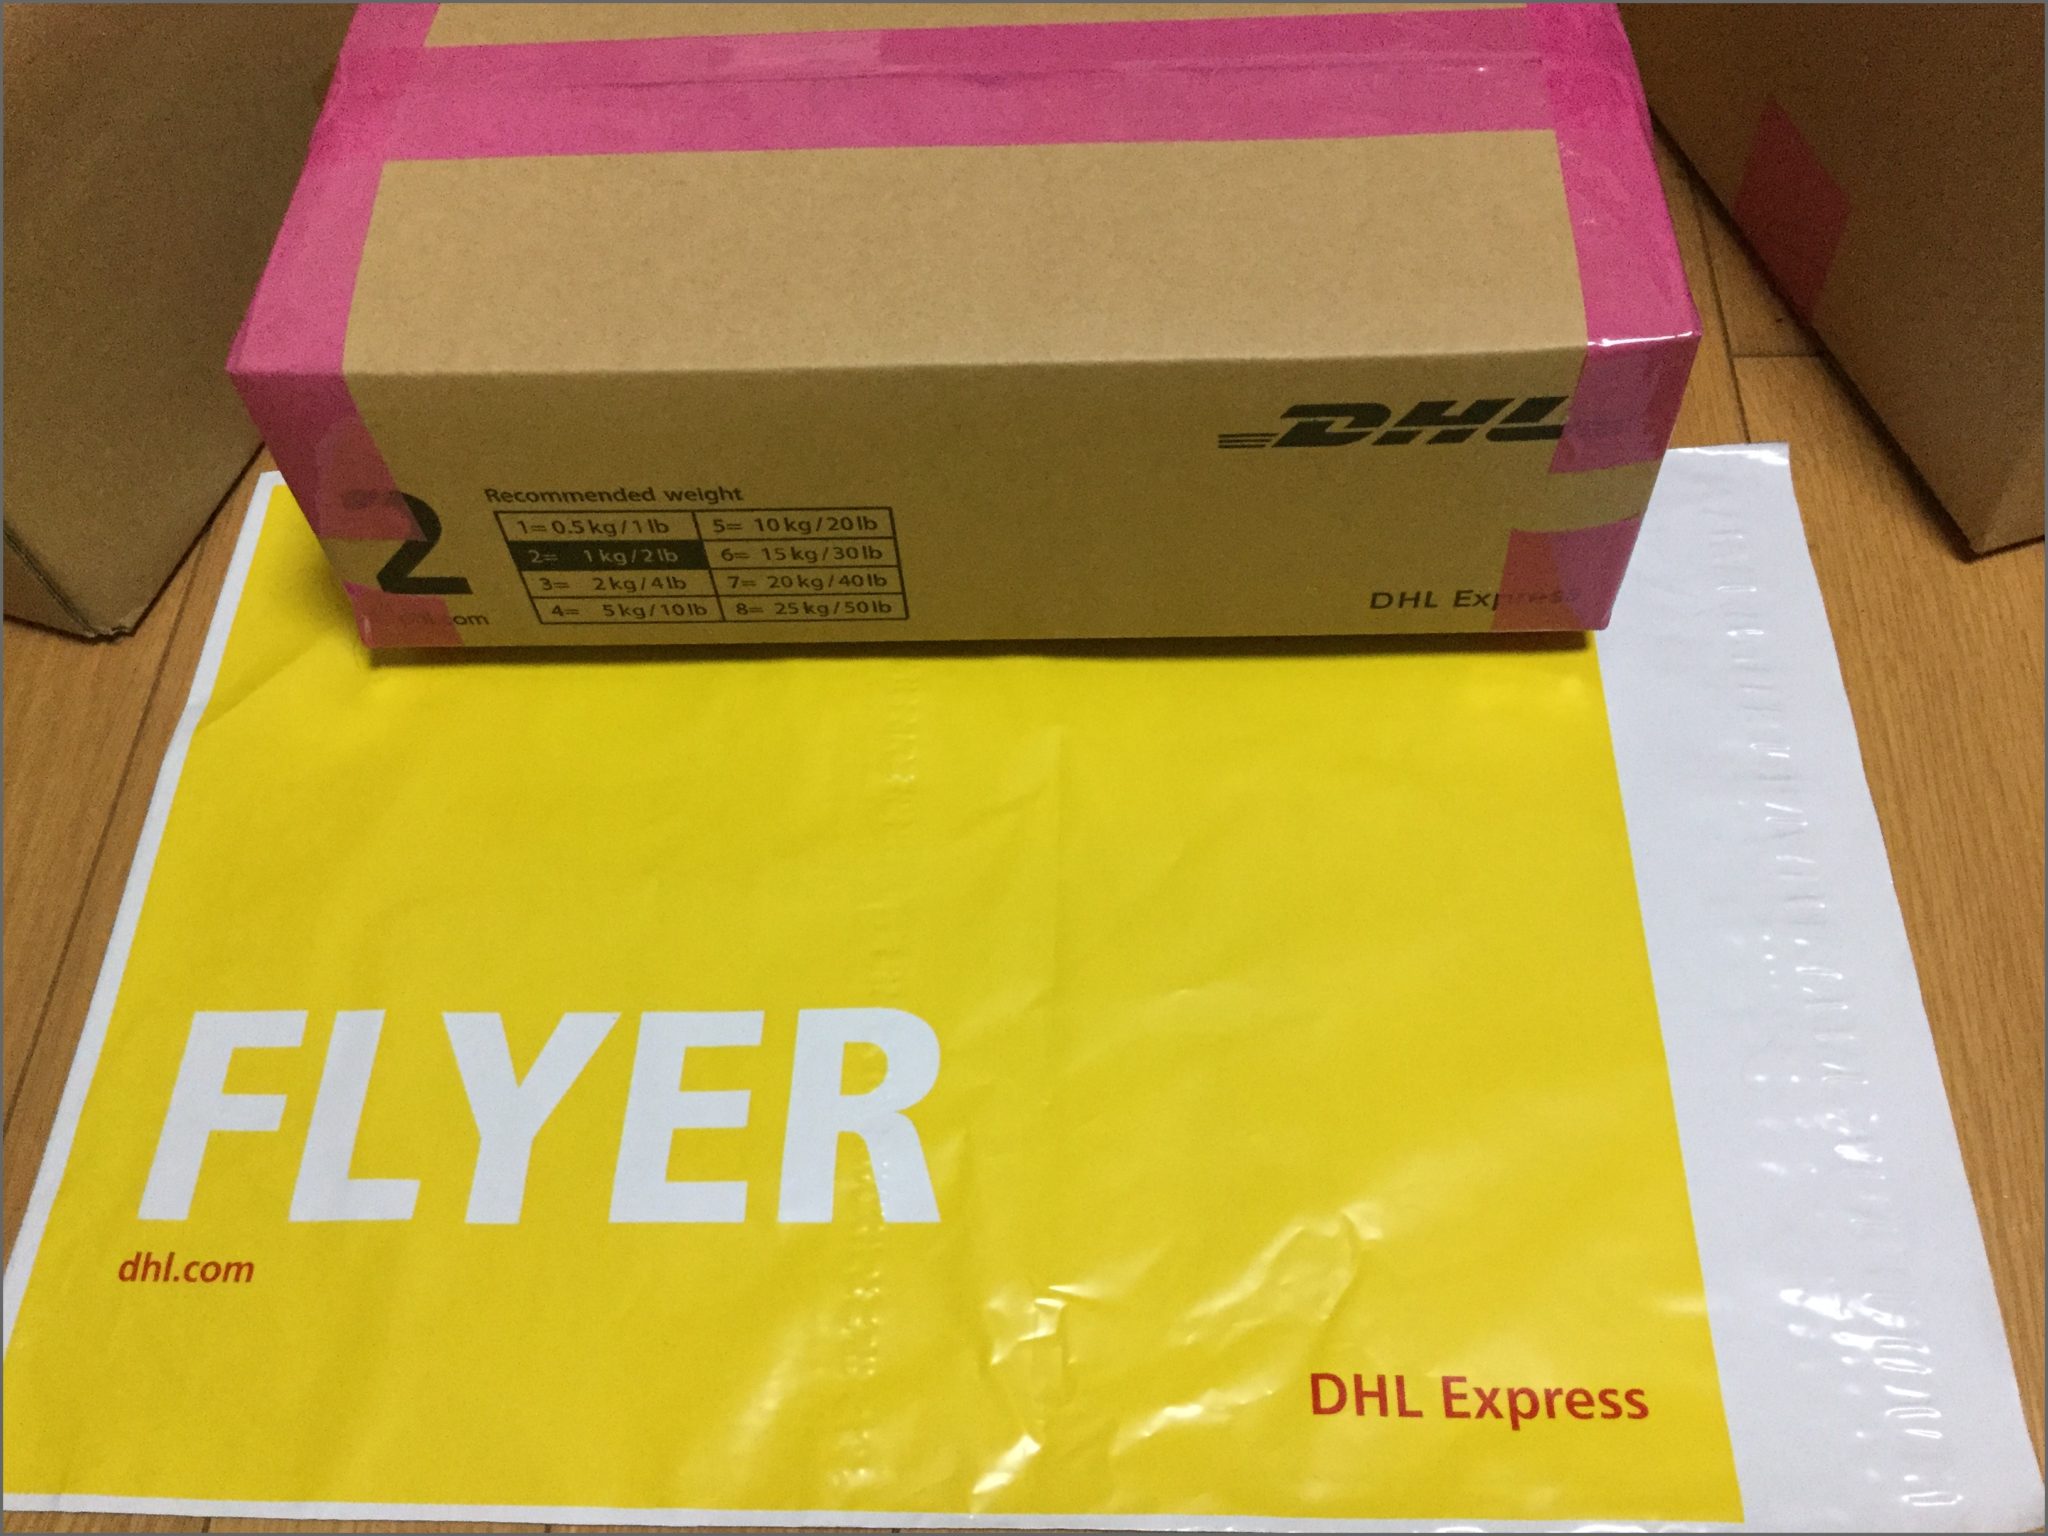 eBay輸出 DHL 本格始動 日本郵便から返送されてきた商品の行方 – ちび太のeBay輸出 オリジナルツールで月収100万円稼いでるよ